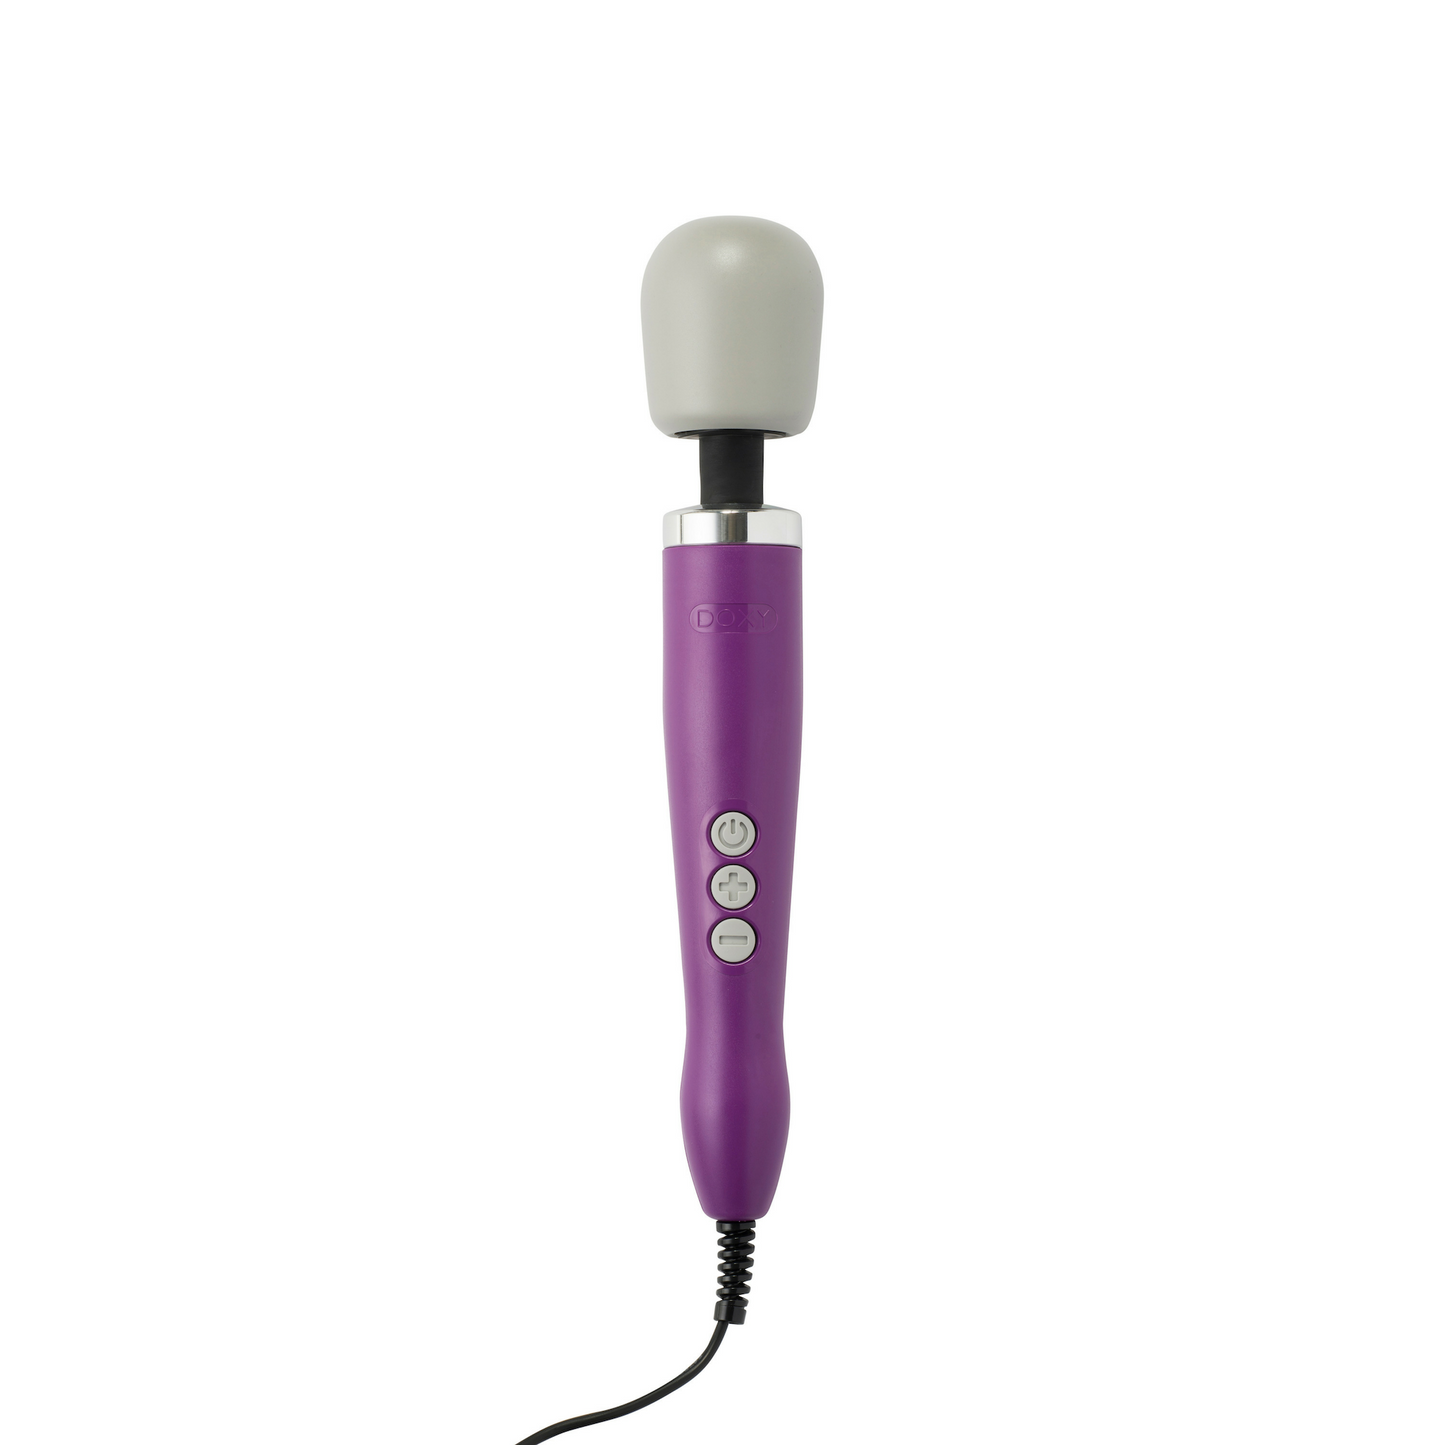 Doxy Original wand in Purple. Vibrating Wand product image